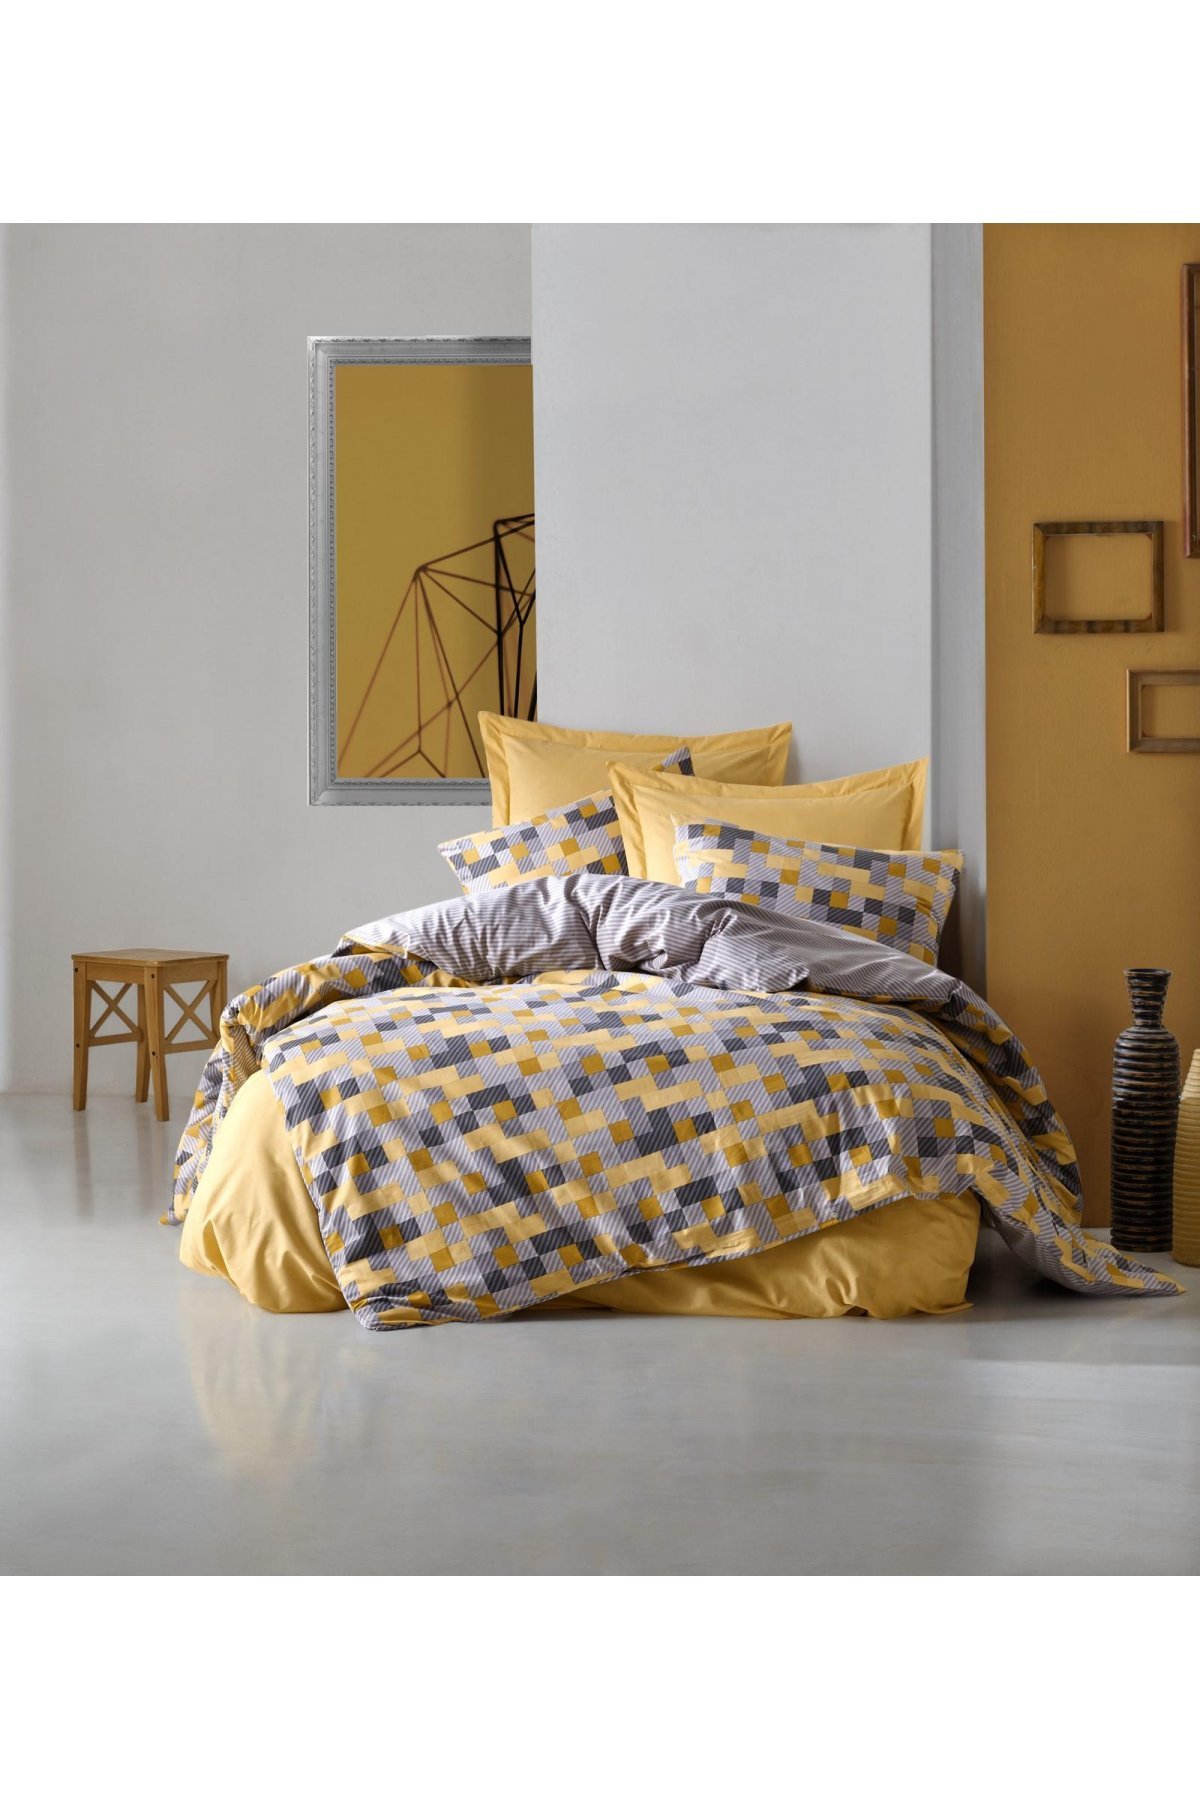 Bedding-Yellow